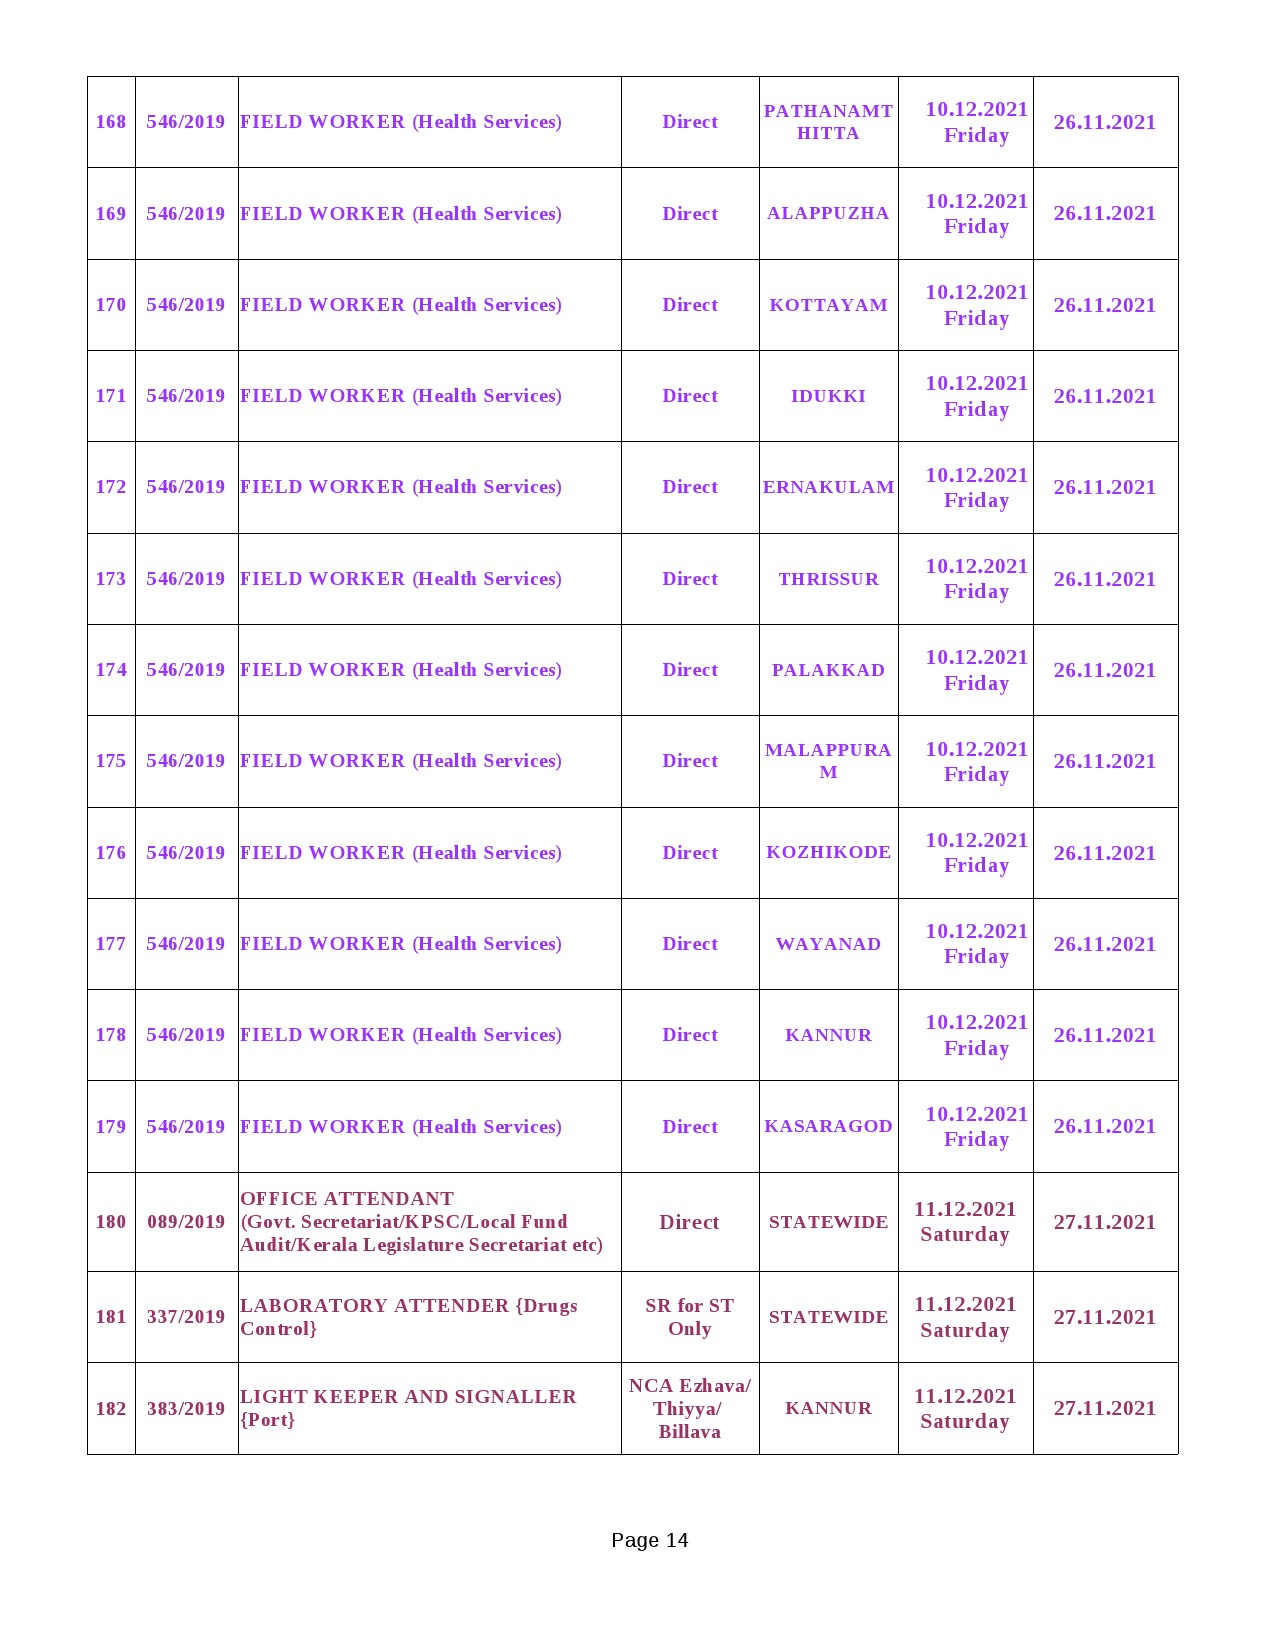 KPSC Programme For Main Examinations Of Upto SSLC Level Posts - Notification Image 14